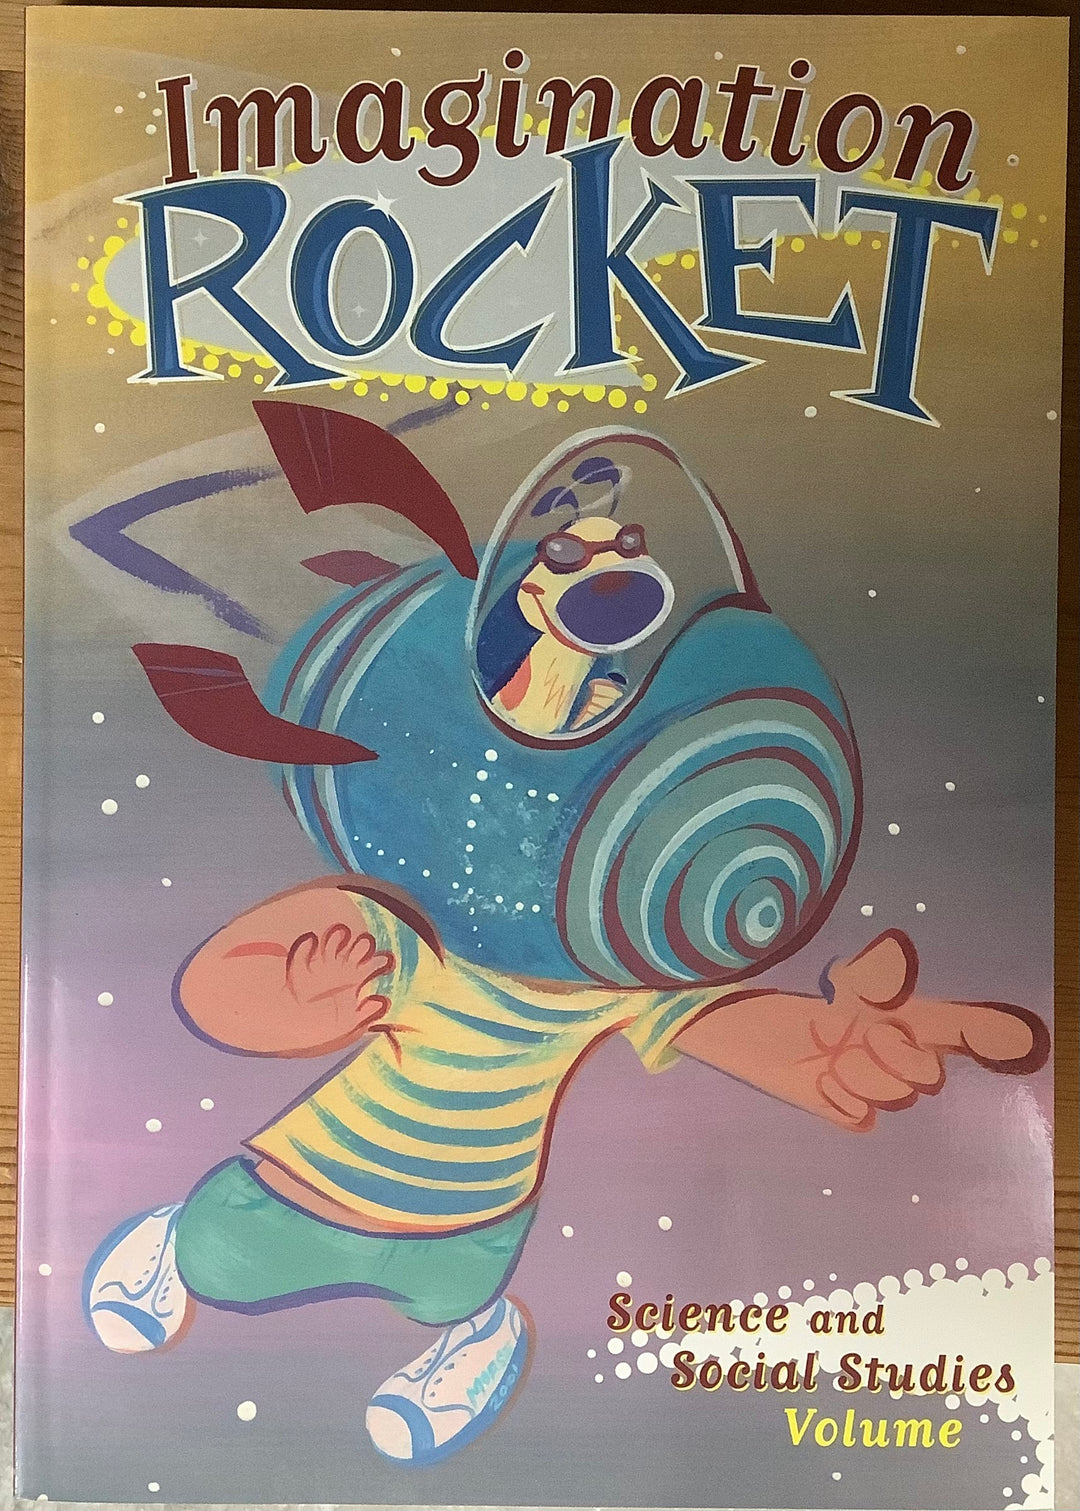 Imagination Rocket: Science and Social Studies Volume Graphic Novel OXS-04